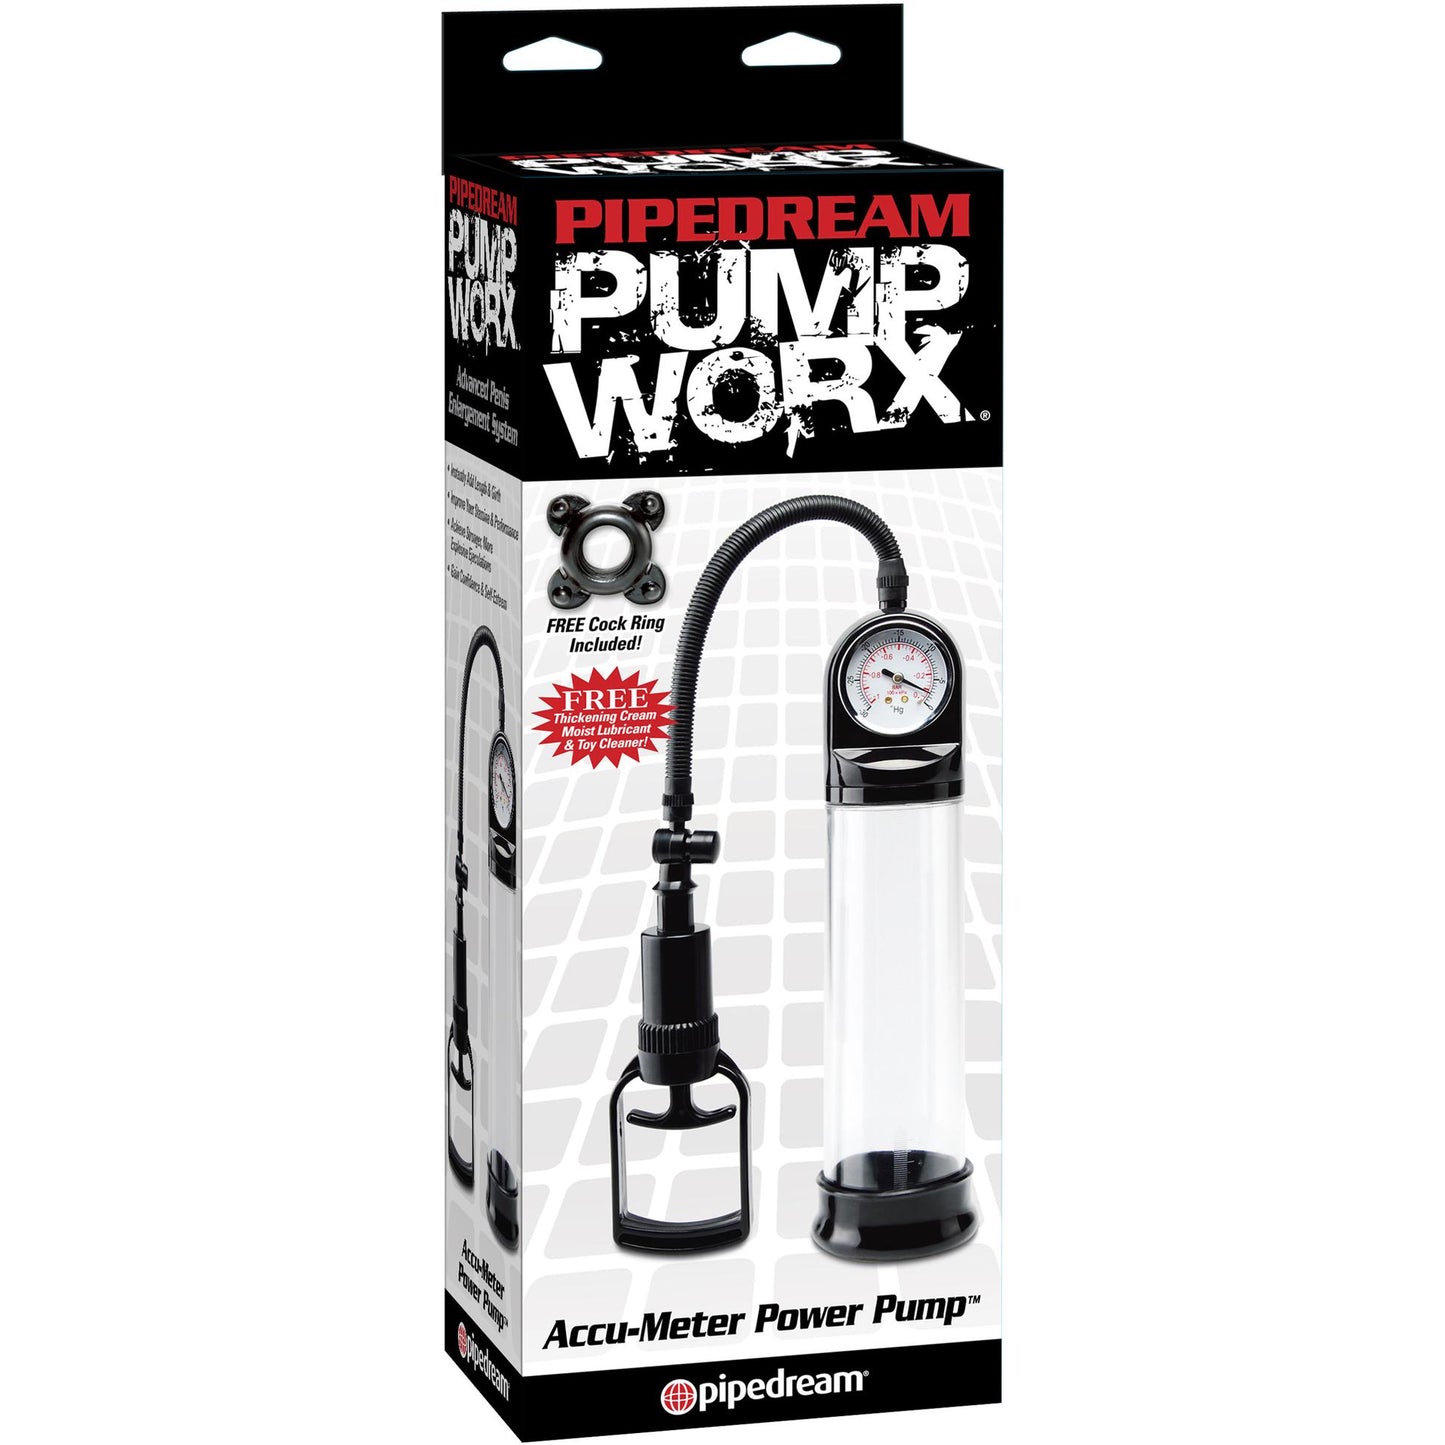 Pump Worx Accu-Meter Power Pump